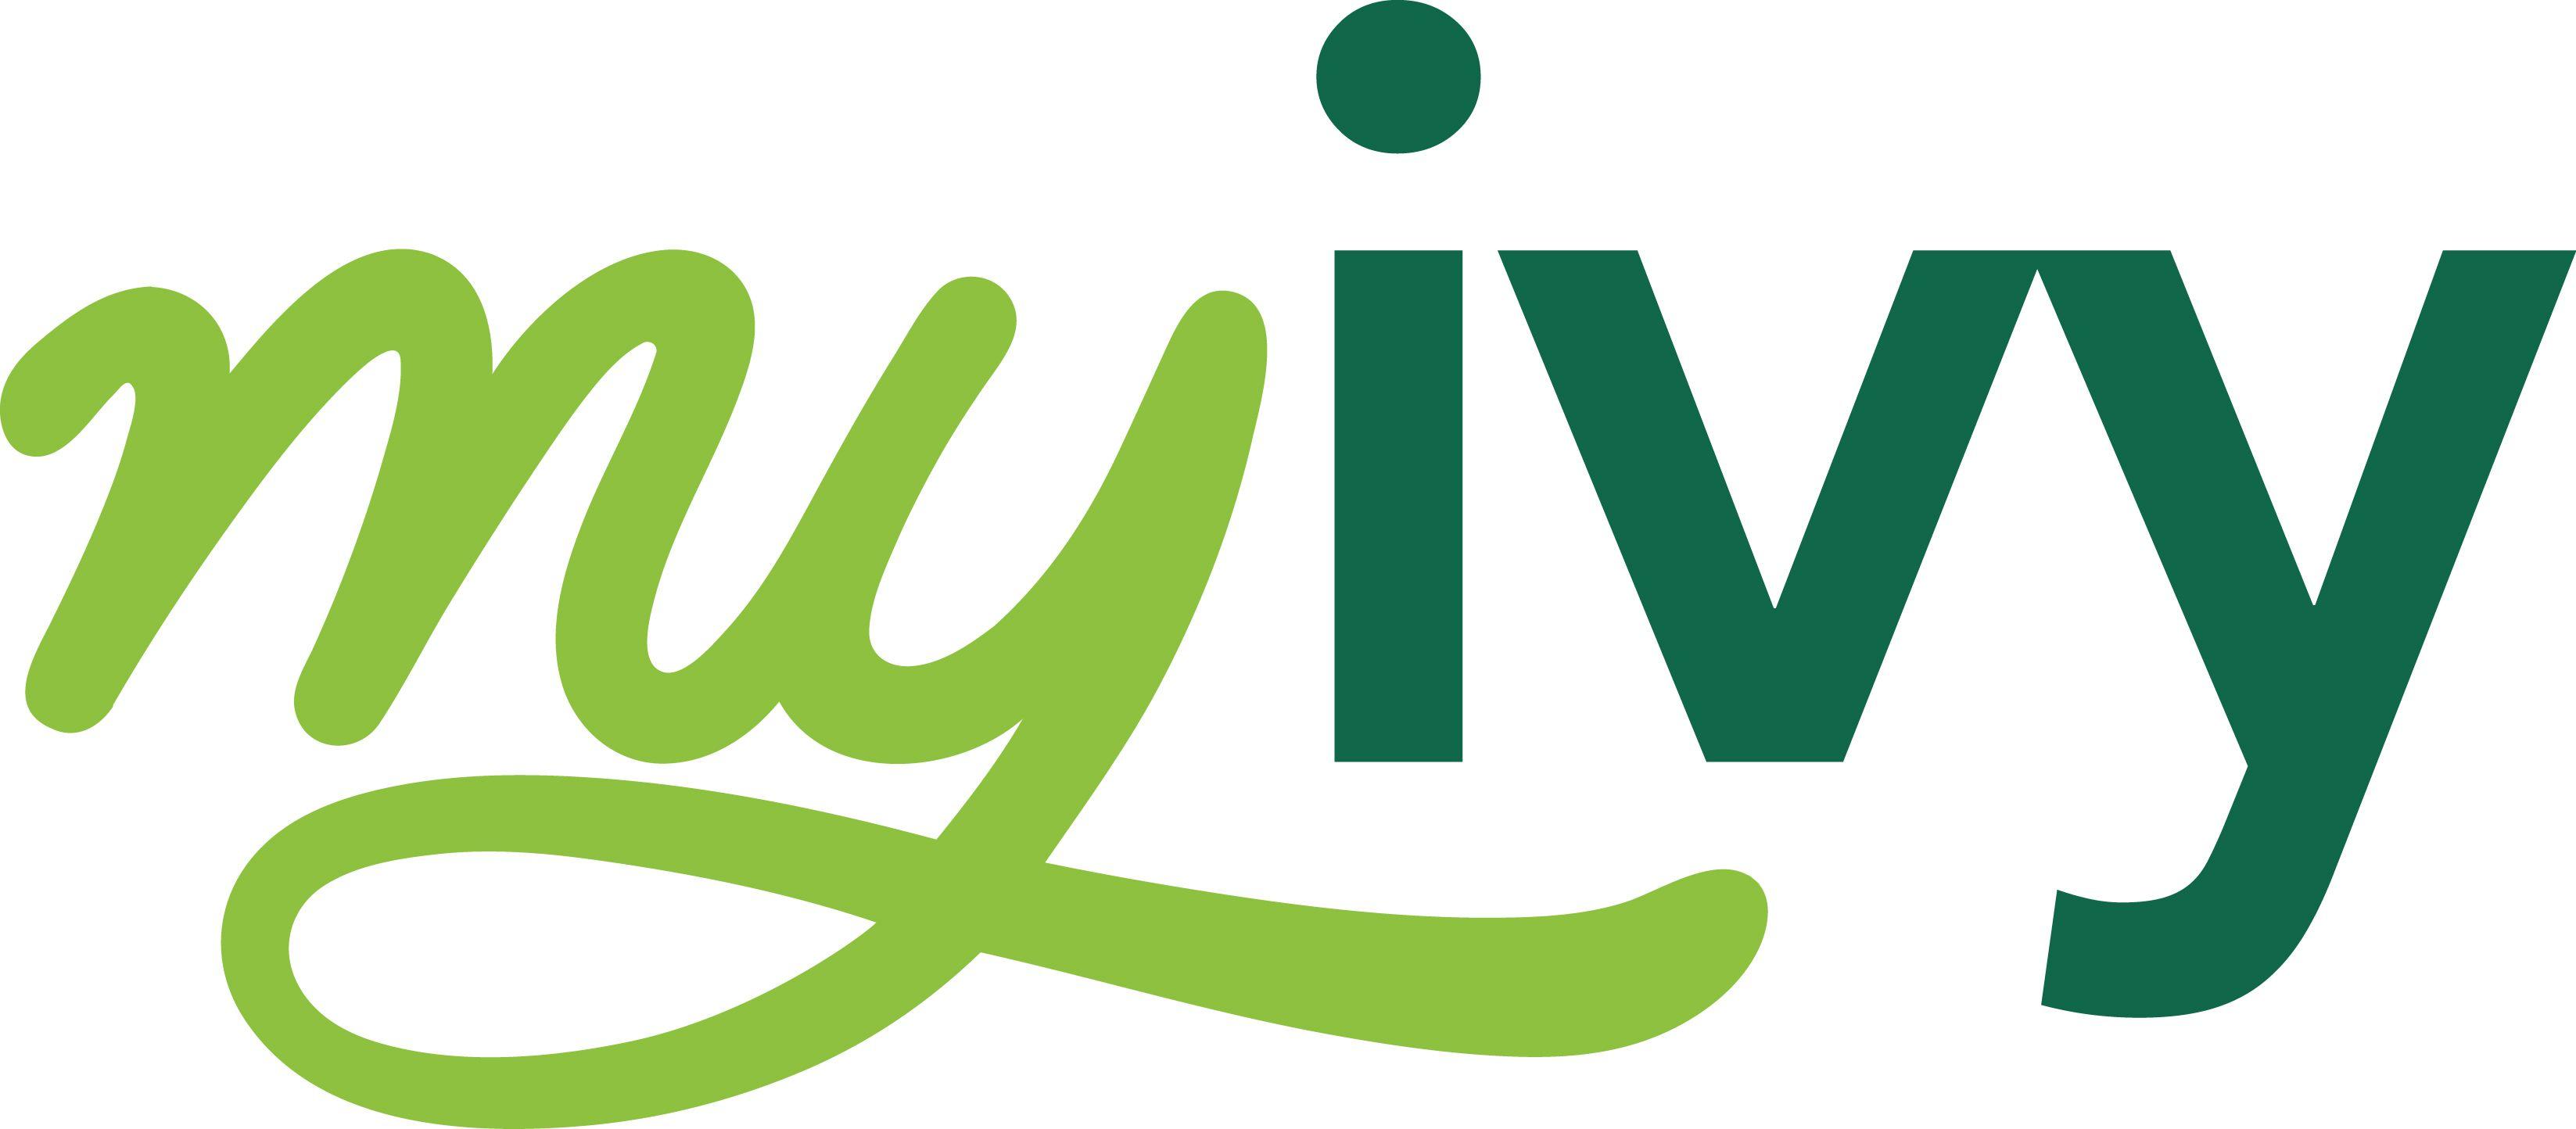 My Logo - Logos - Ivy Tech Community College of Indiana